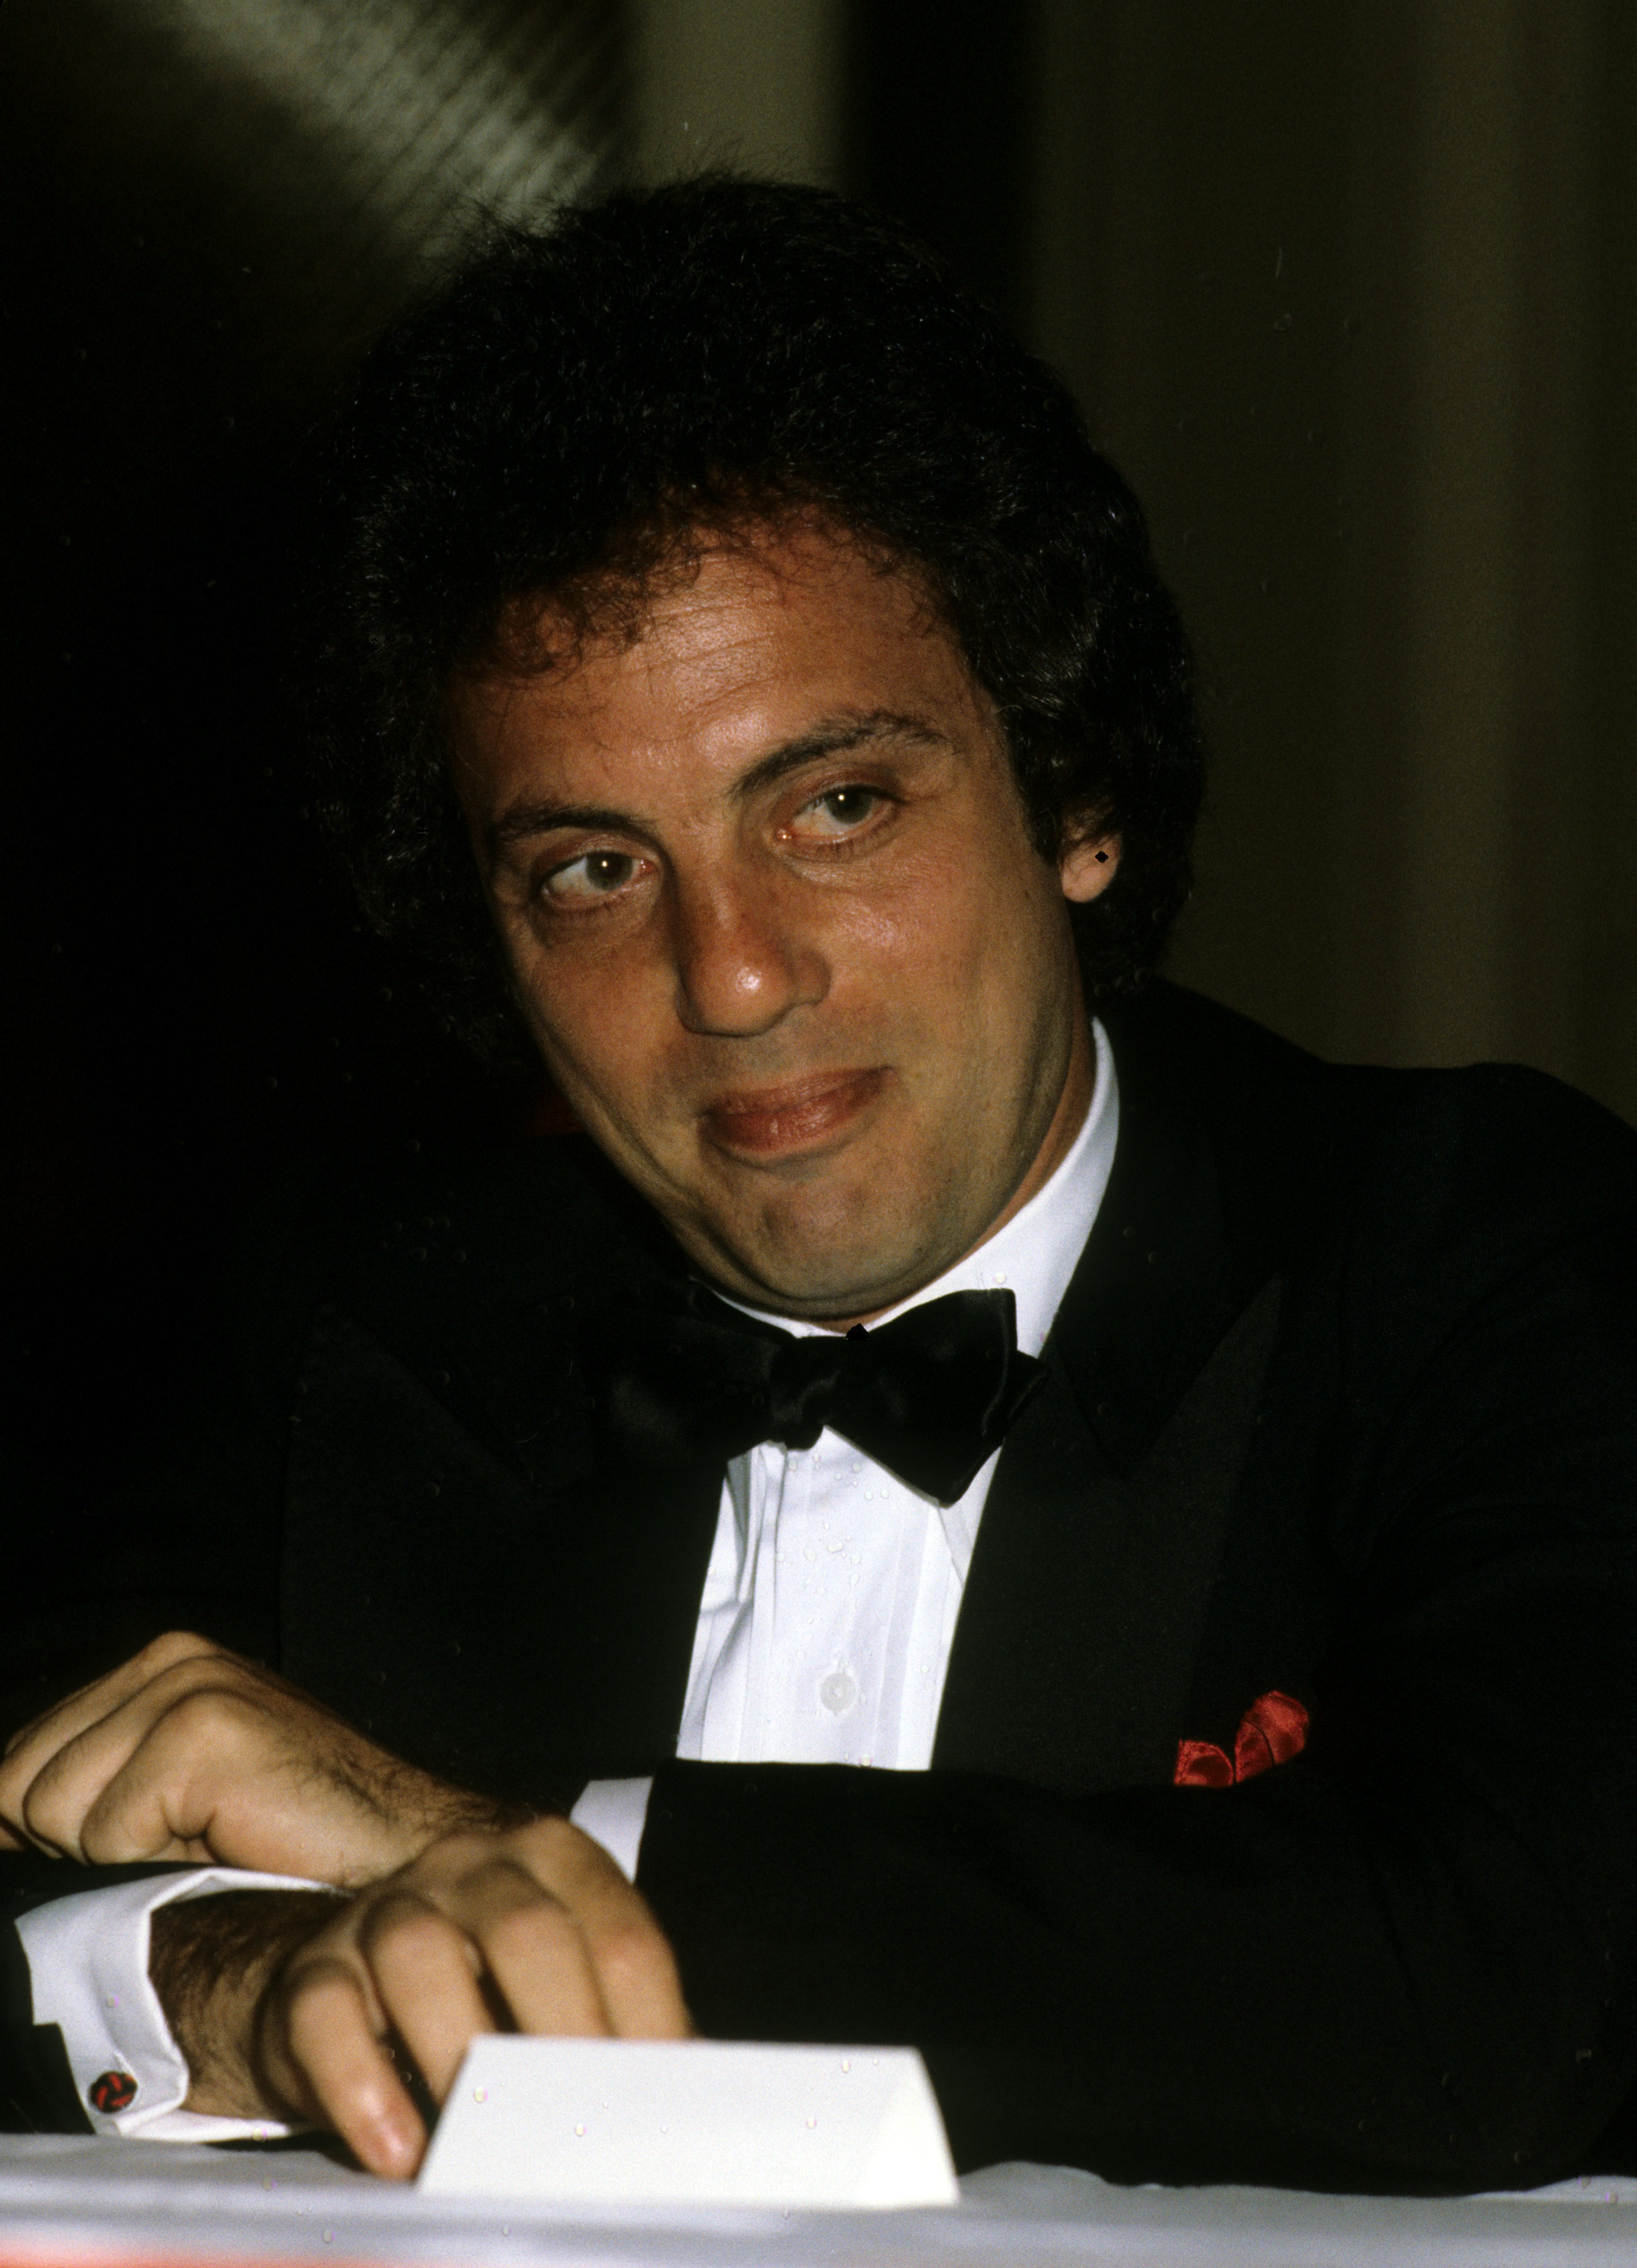 Portrait de Billy Joel | Source : Getty Images